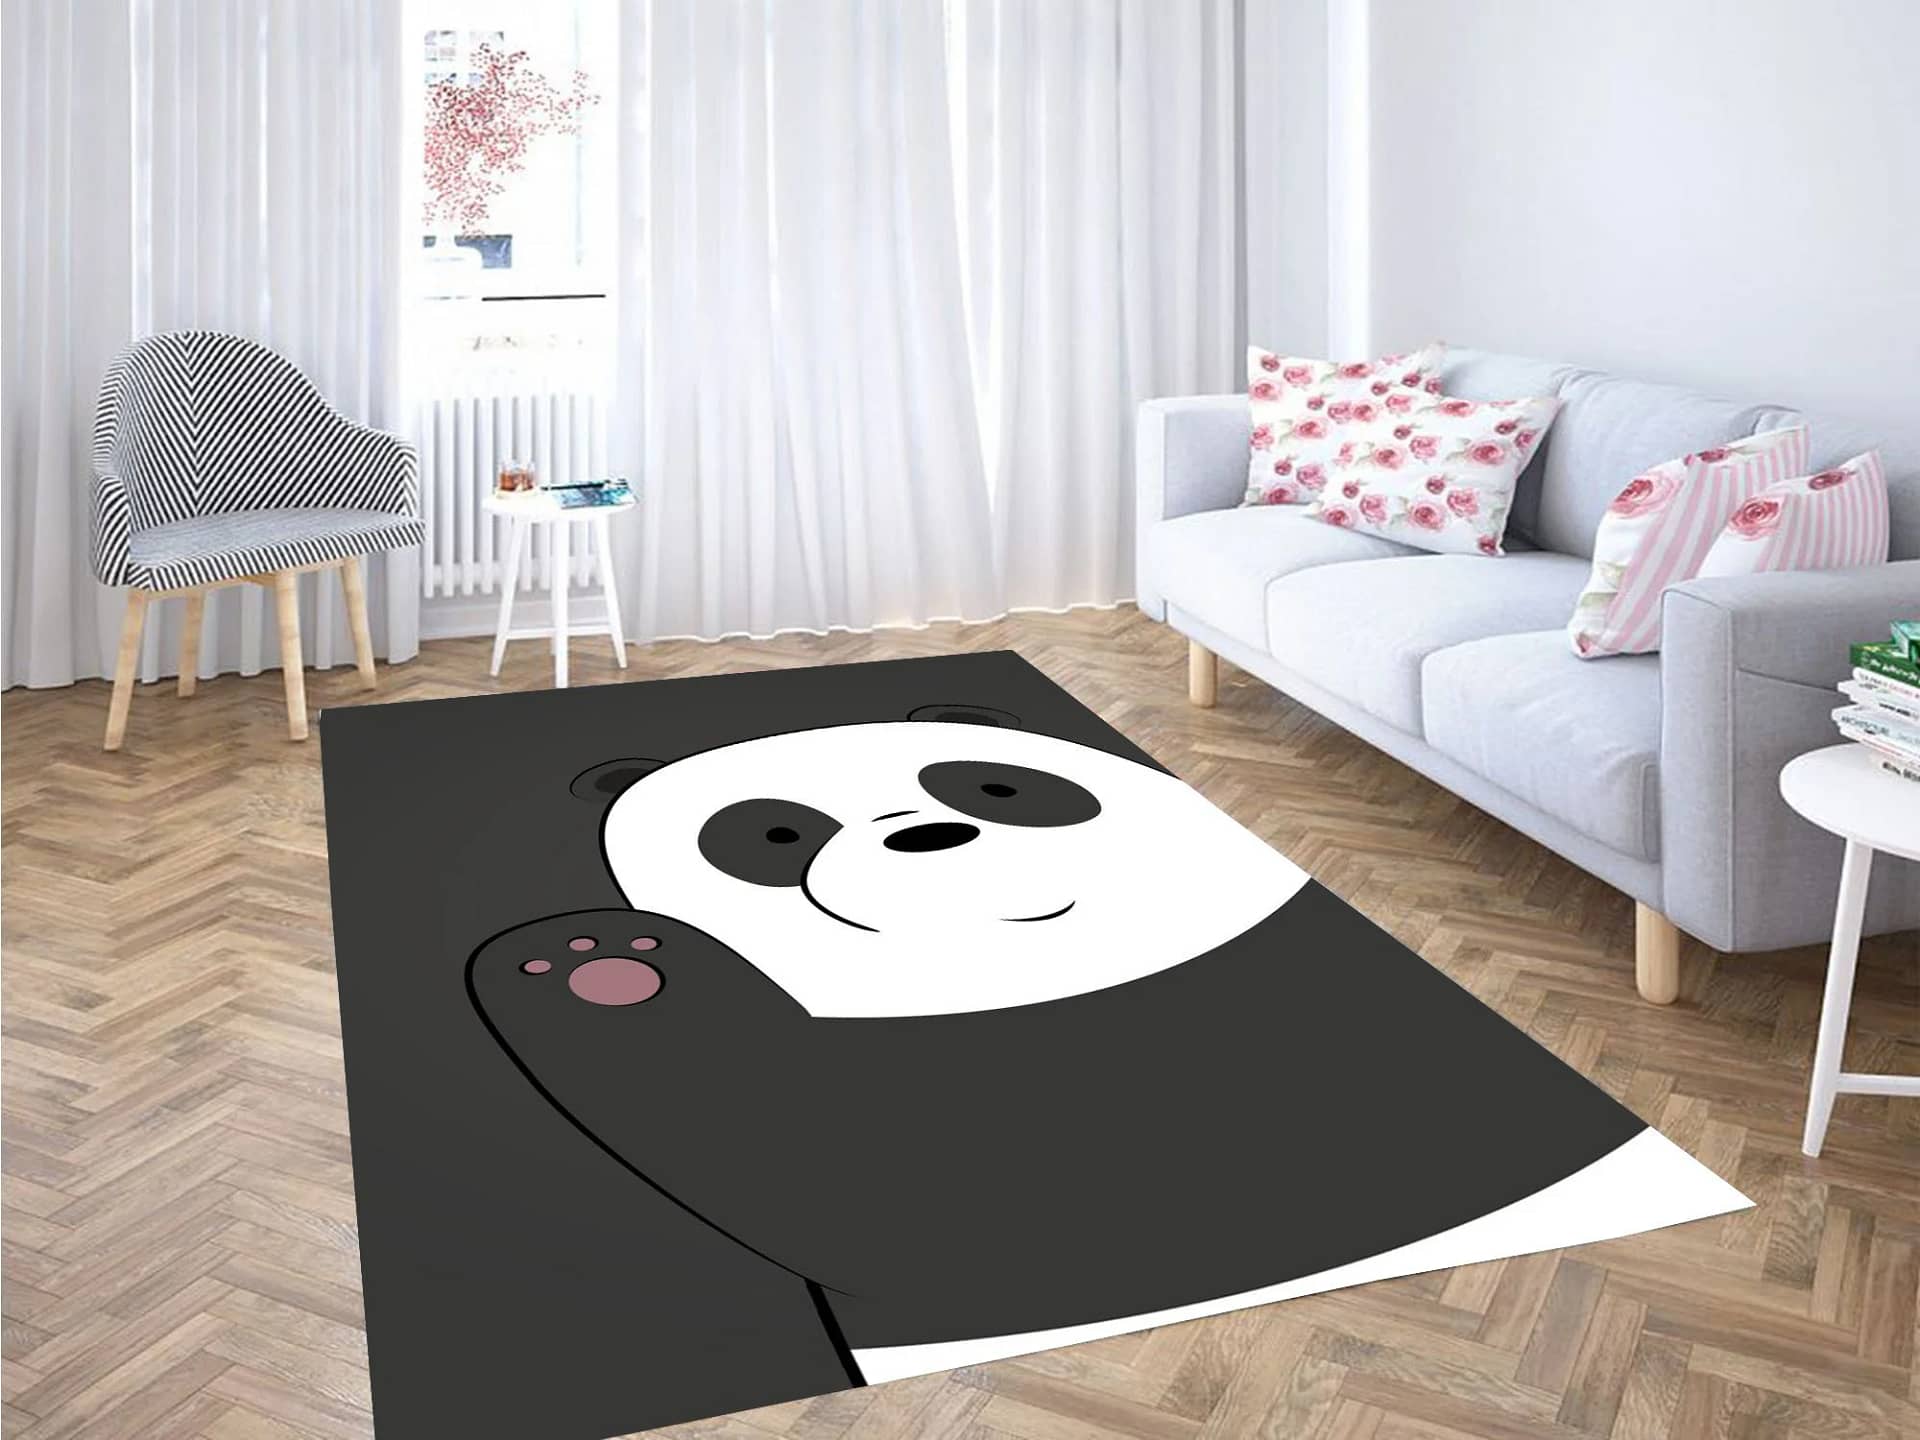 We Bare Bears Panda Carpet Rug